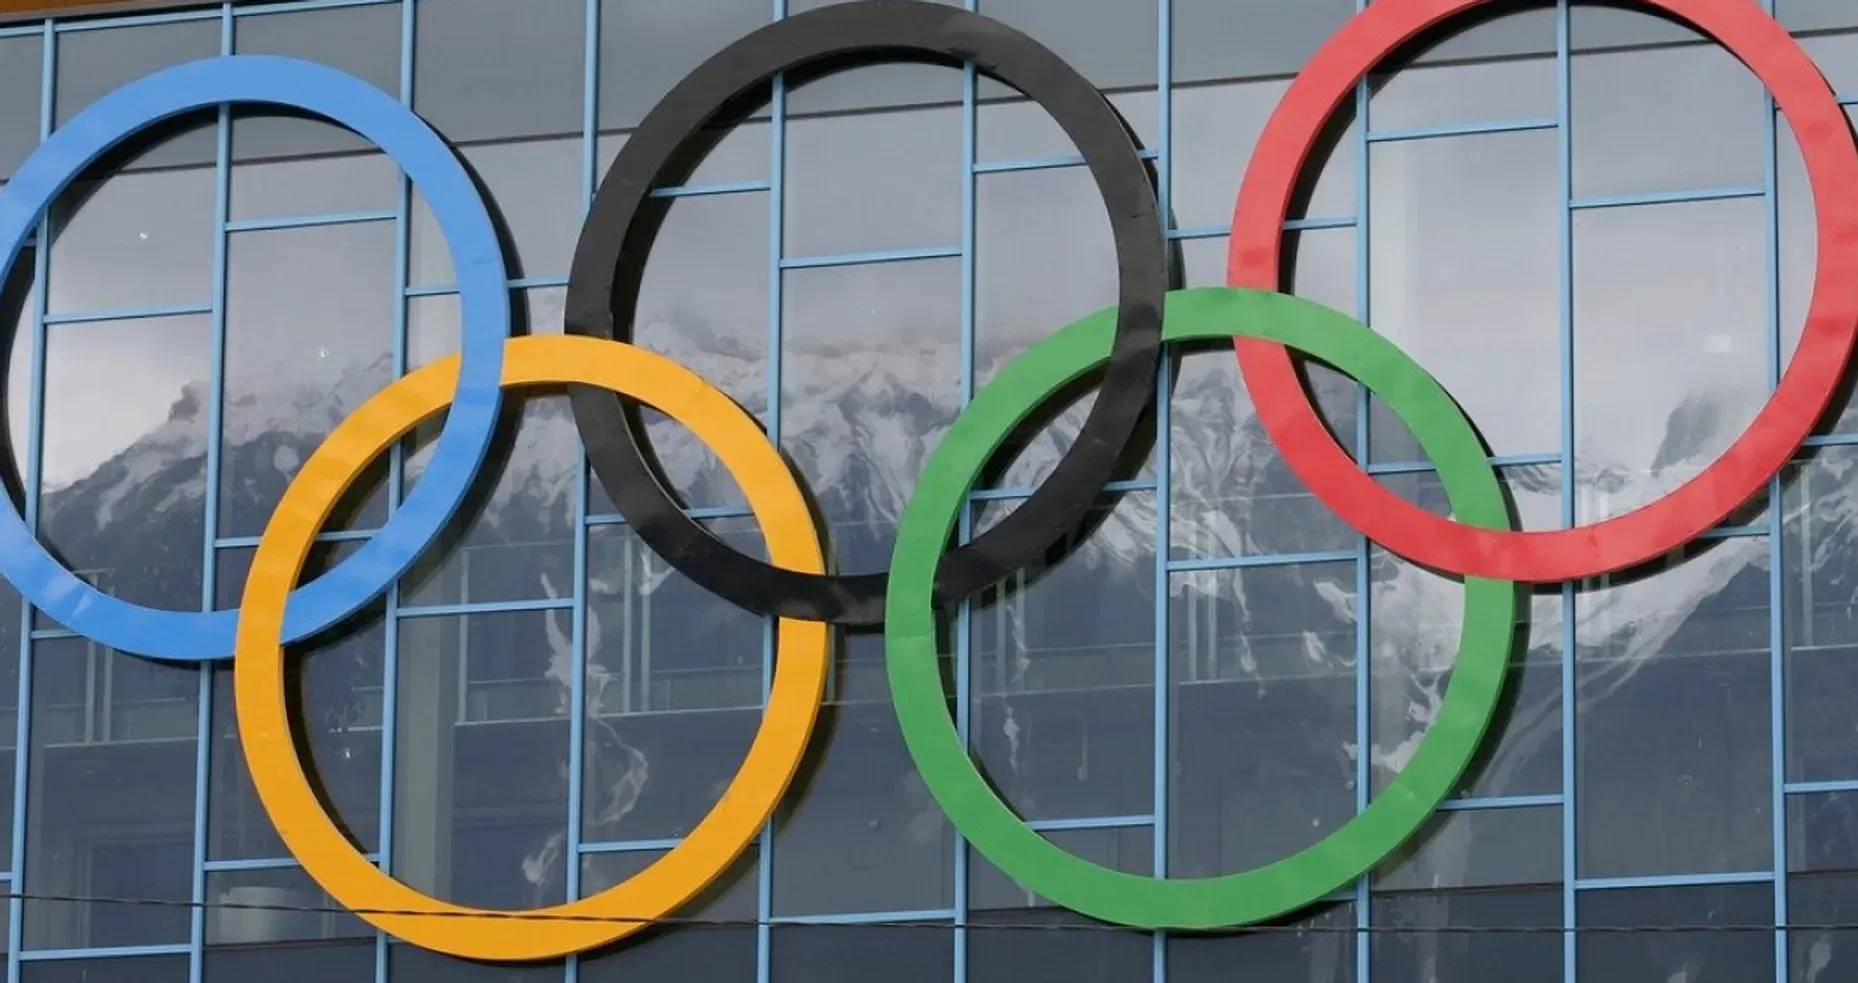 Russian propagandists slam Olympics opening ceremony